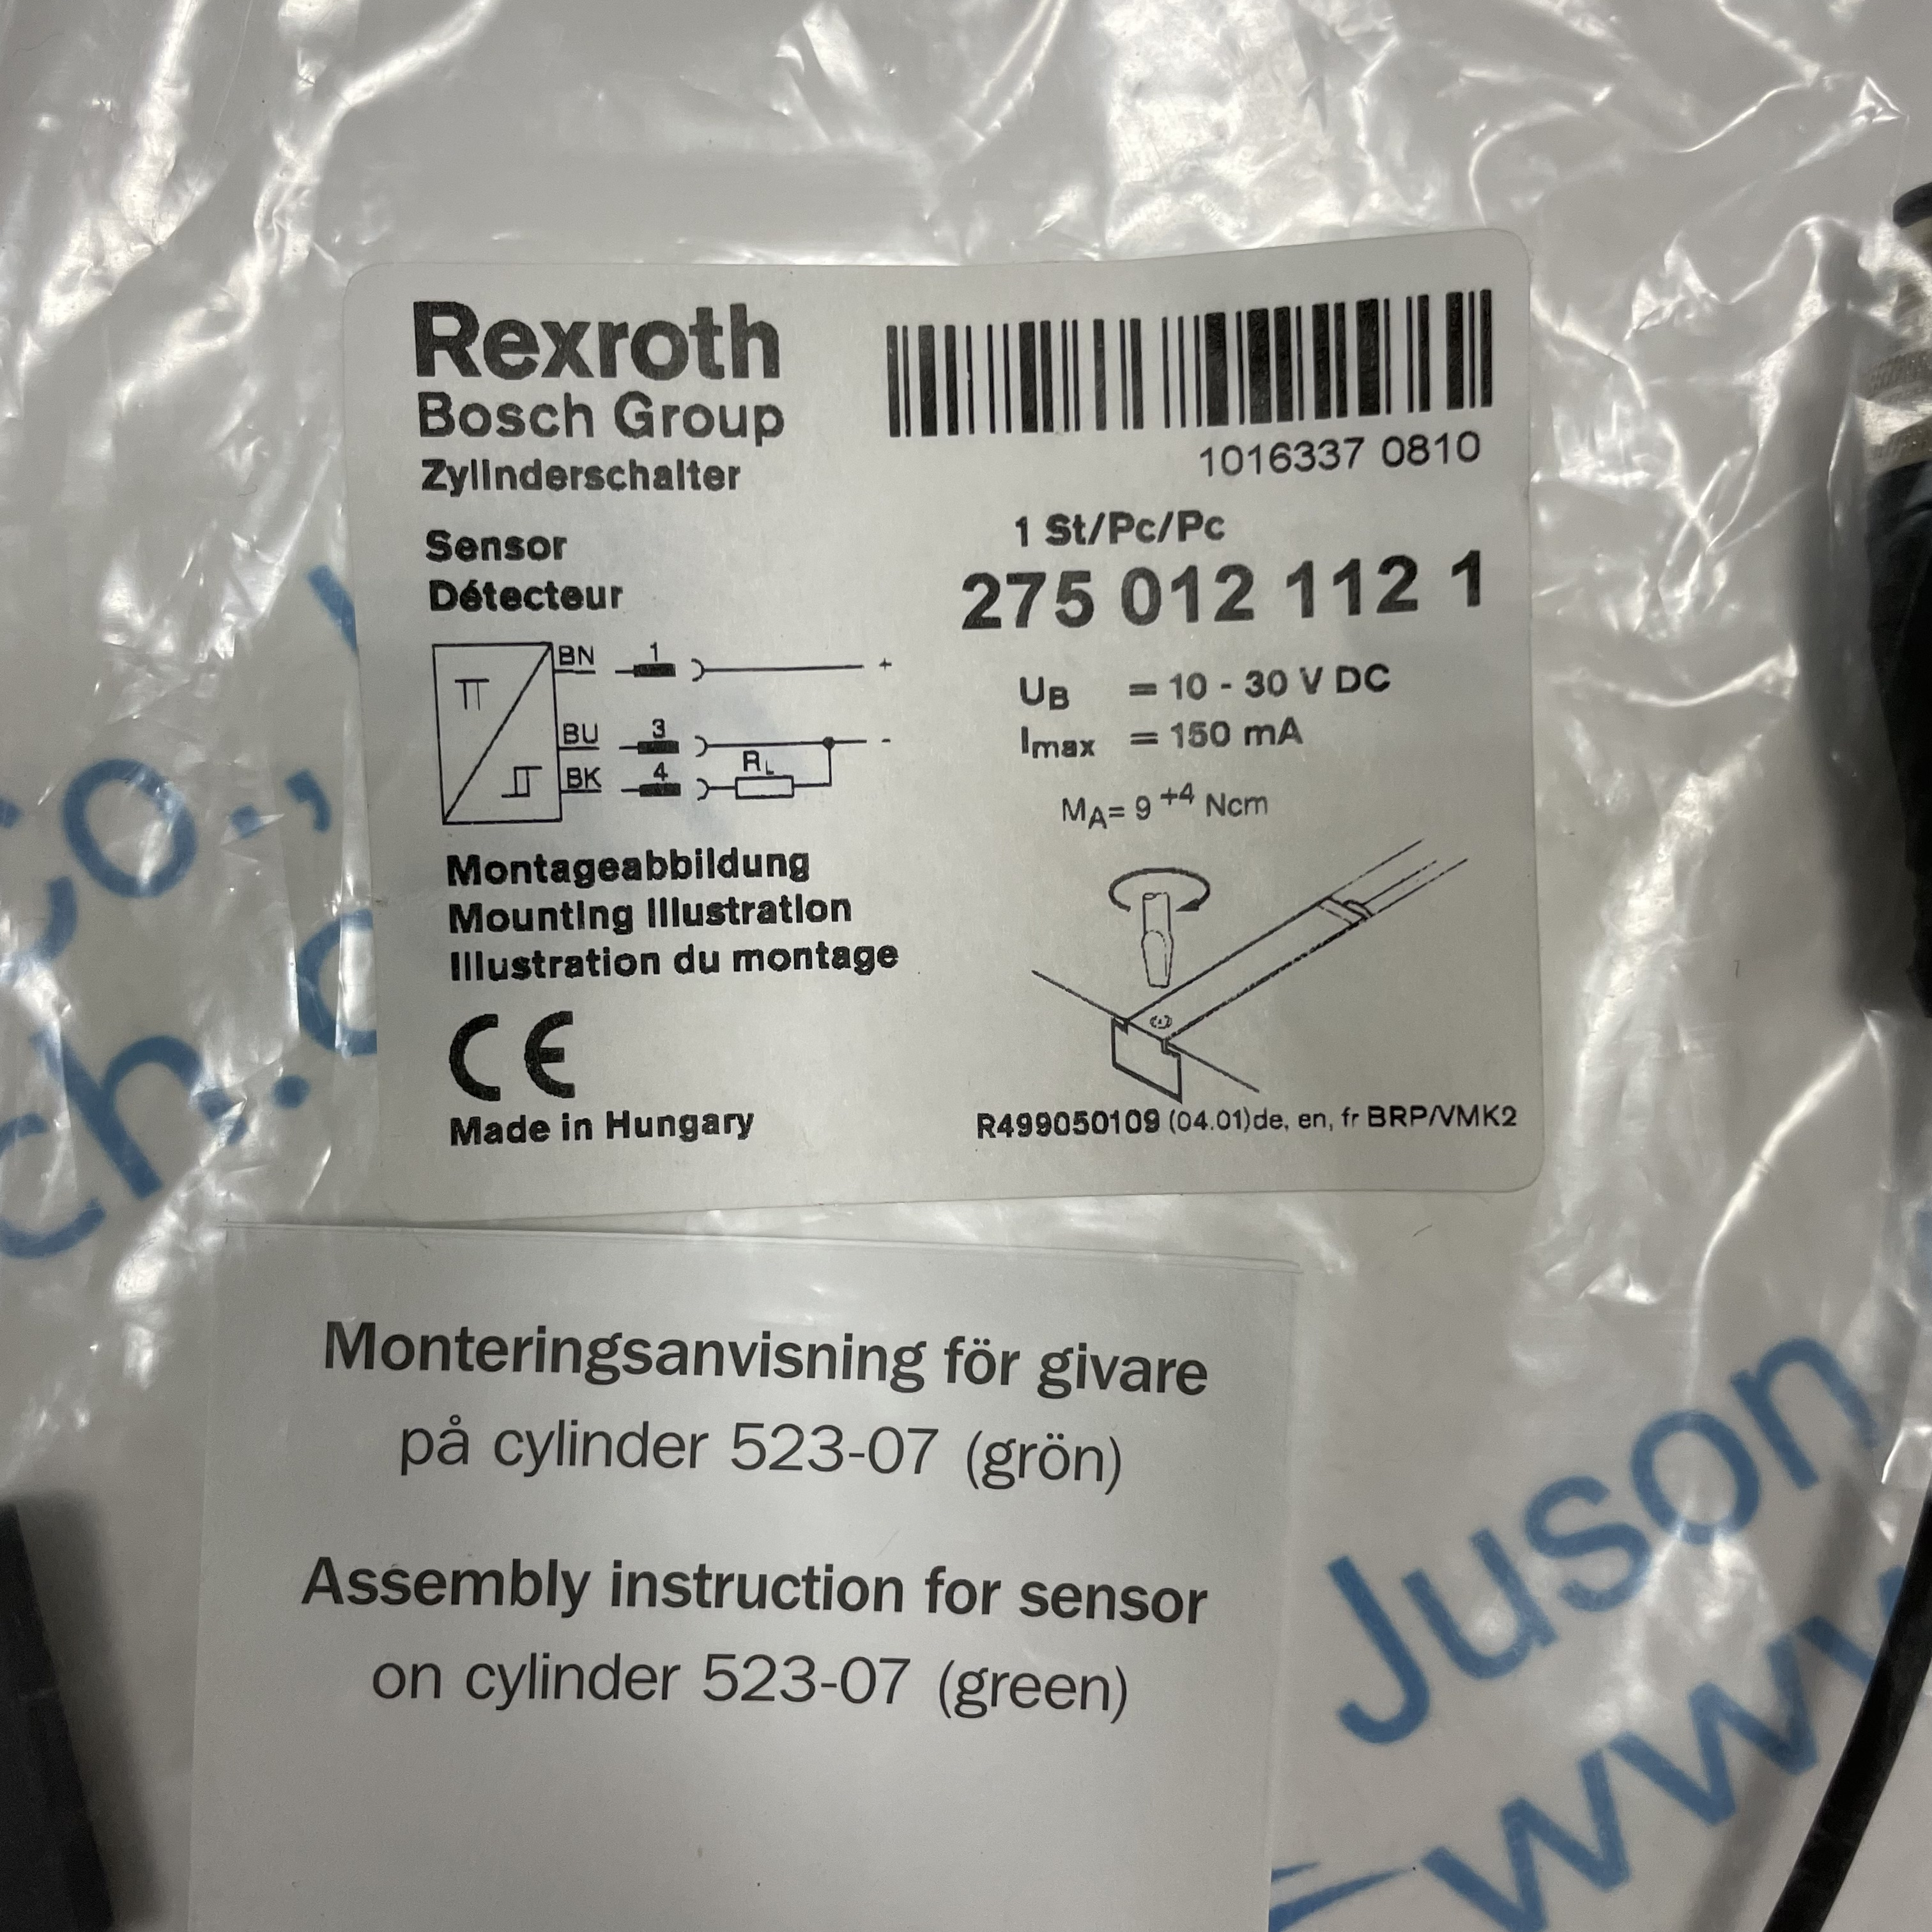 Rerxroth encoder 2750121121